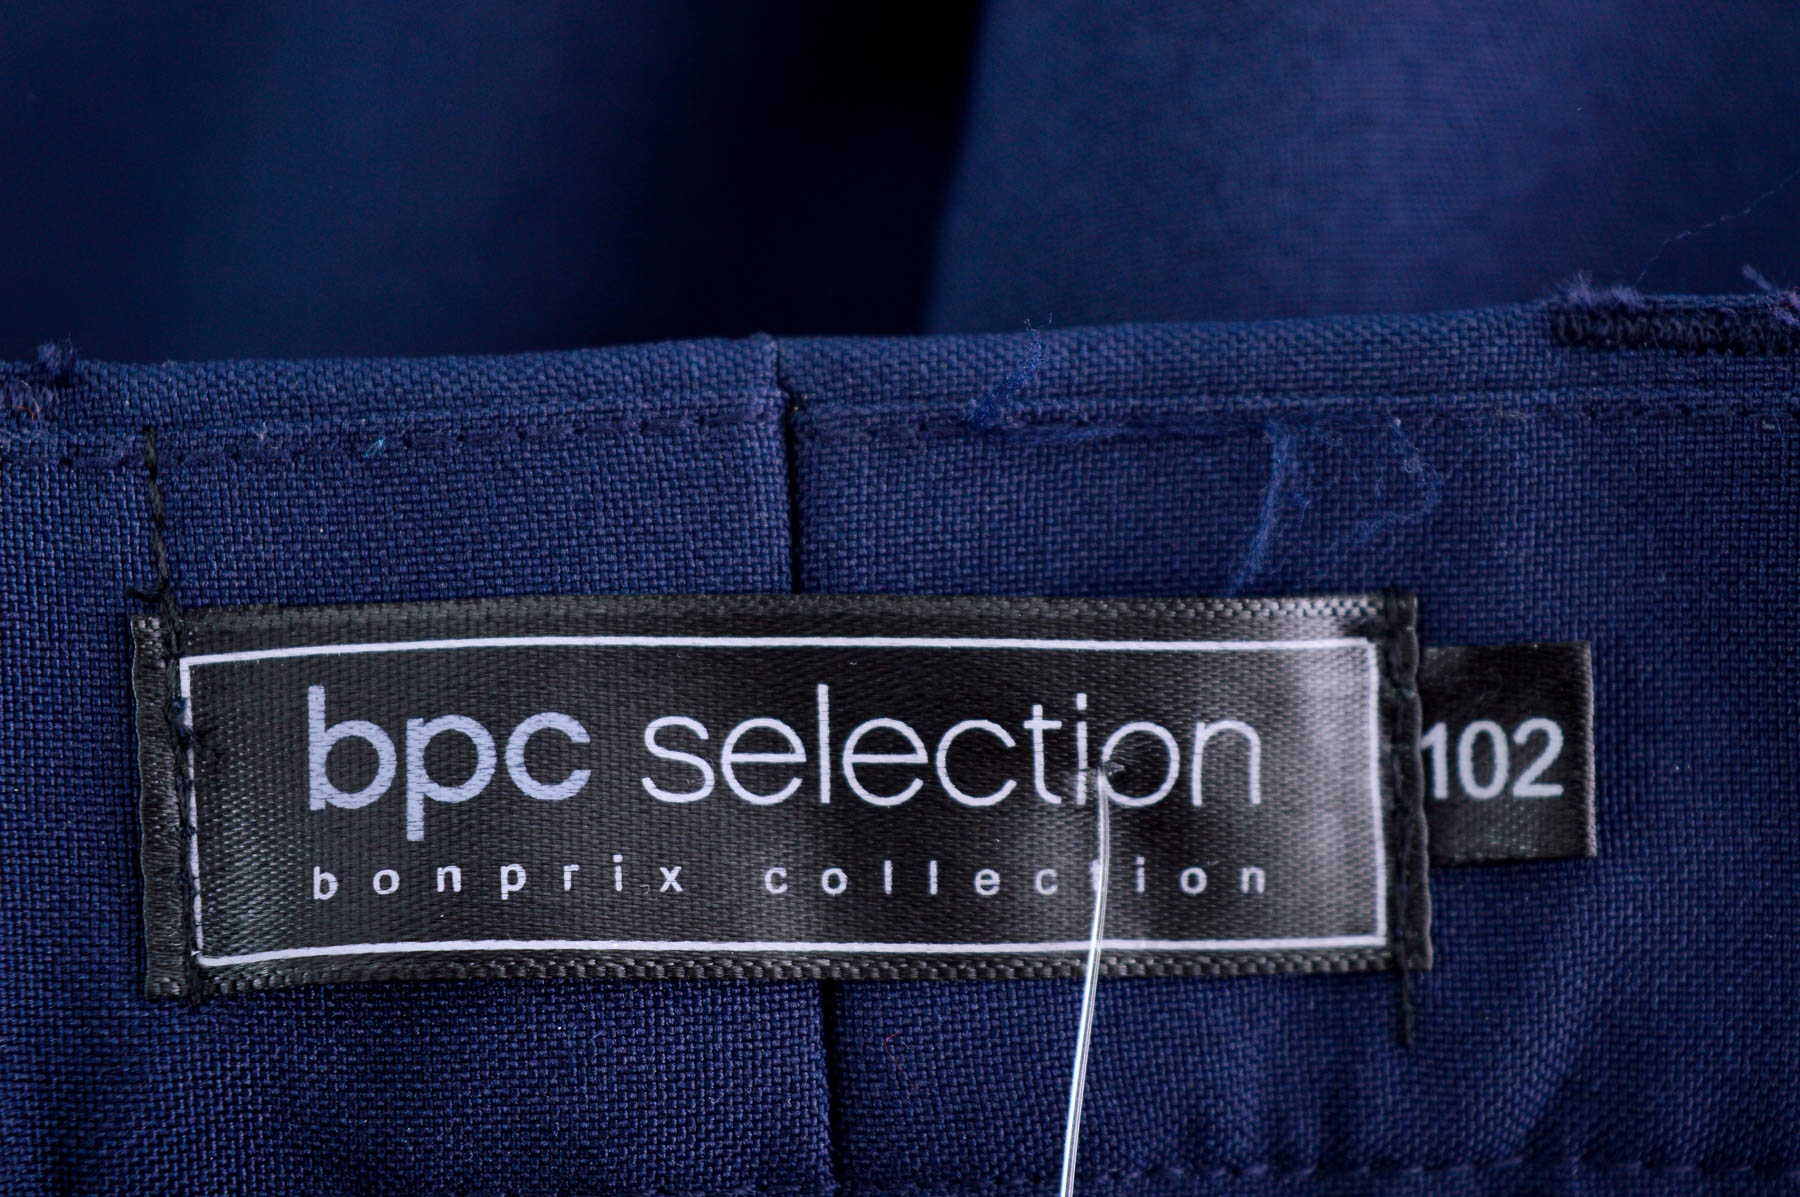 Męskie spodnie - Bpc Selection Bonprix Collection - 2